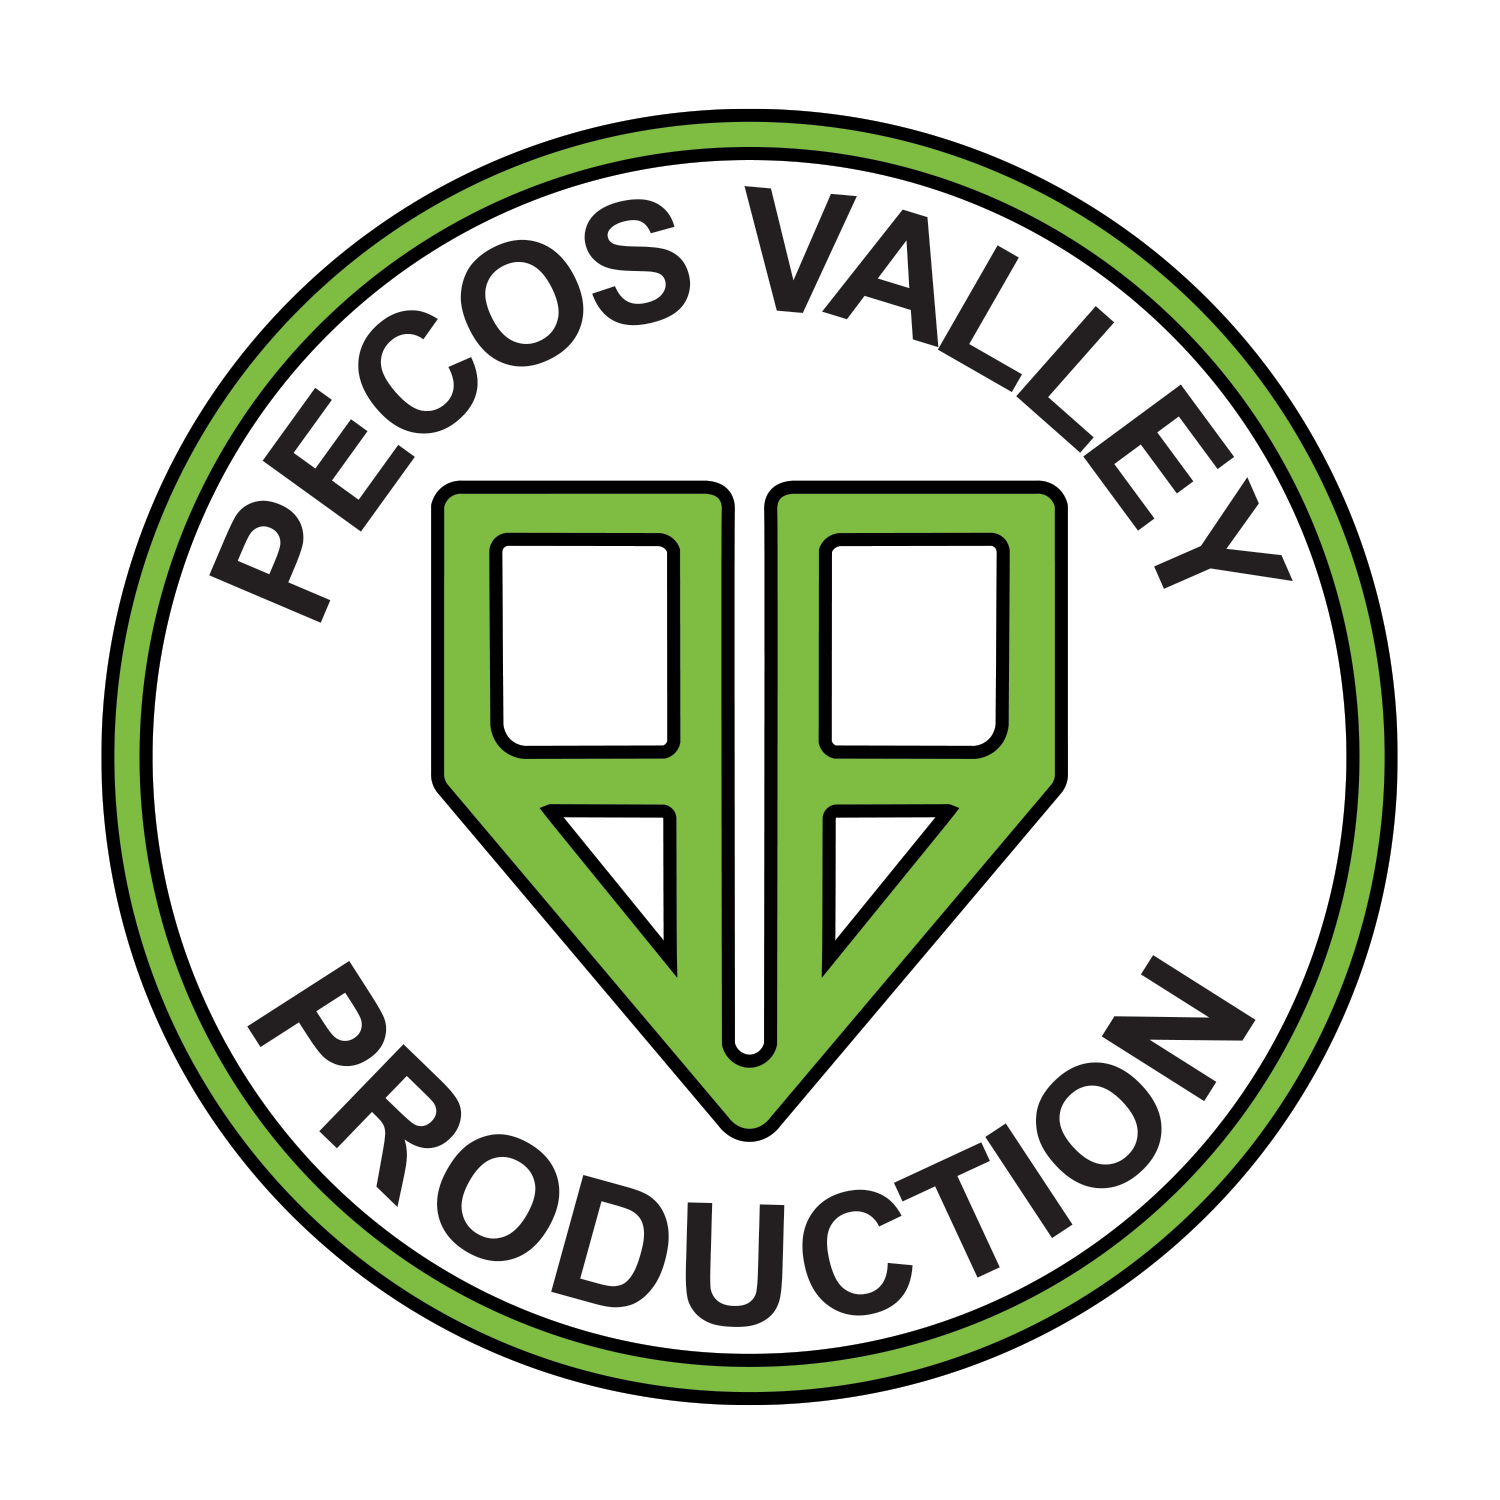 Pecos Valley Production - Las Cruces